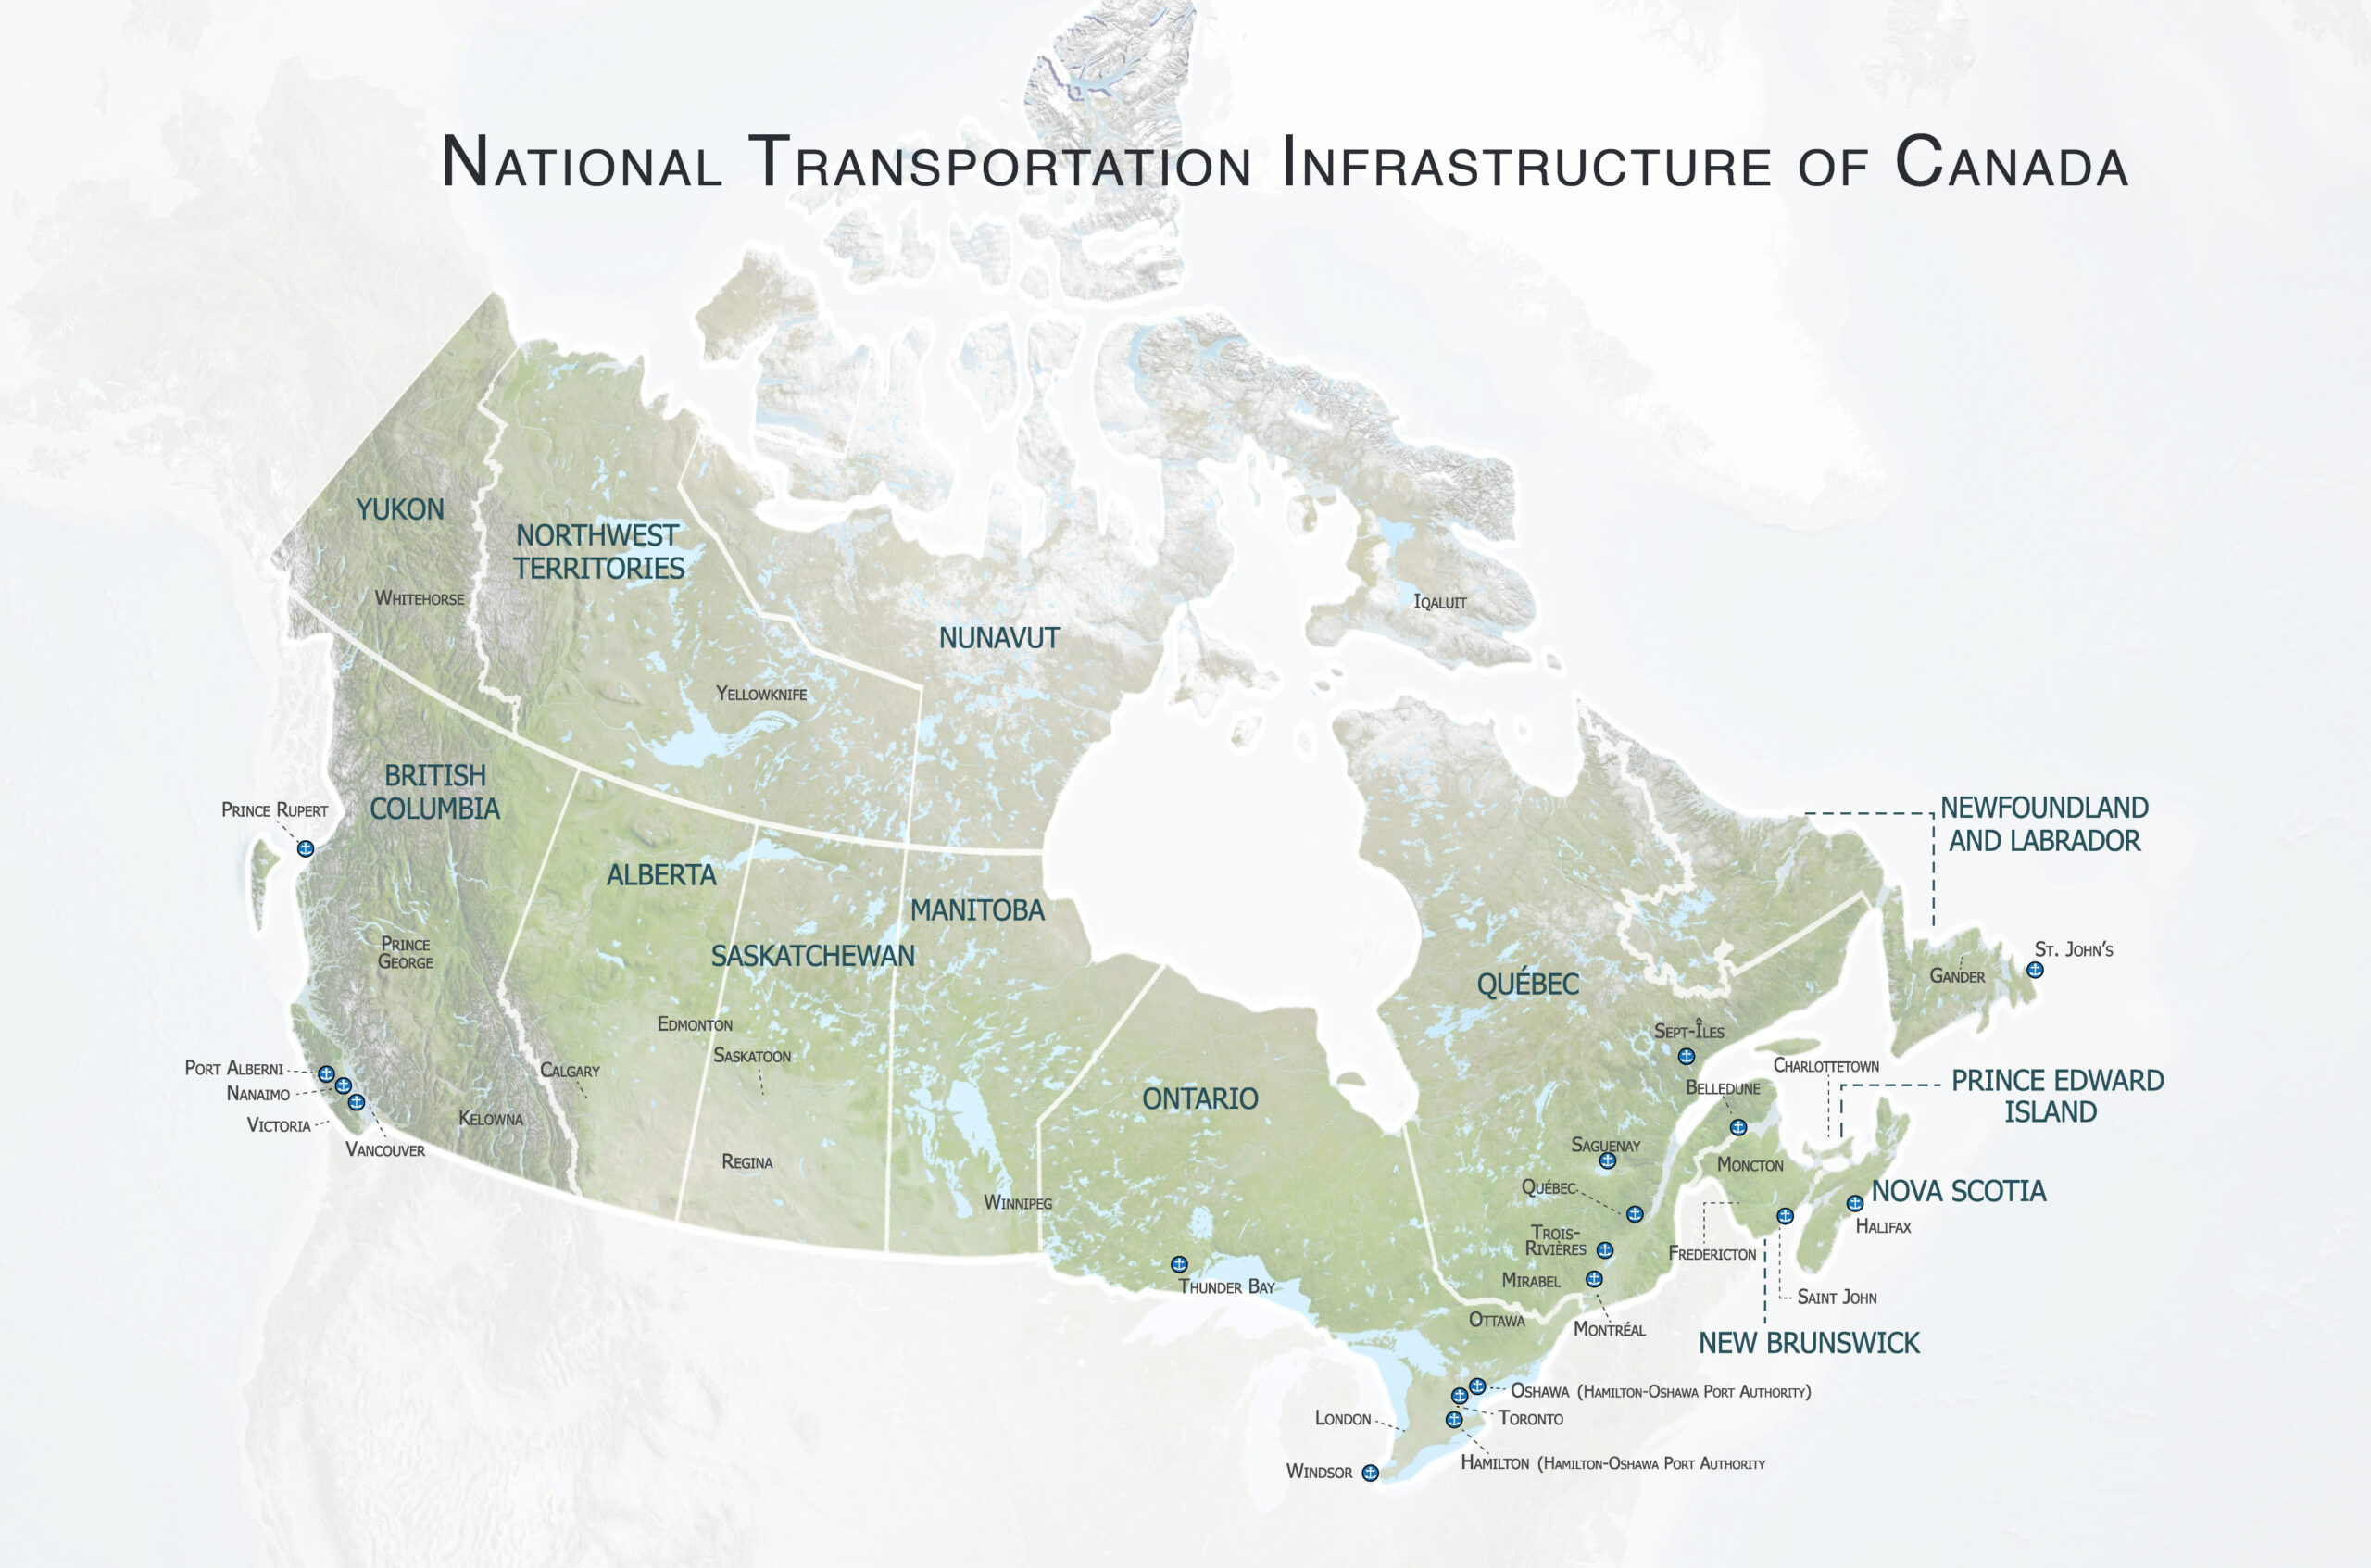 Interactive Canada Port Authorities scaled